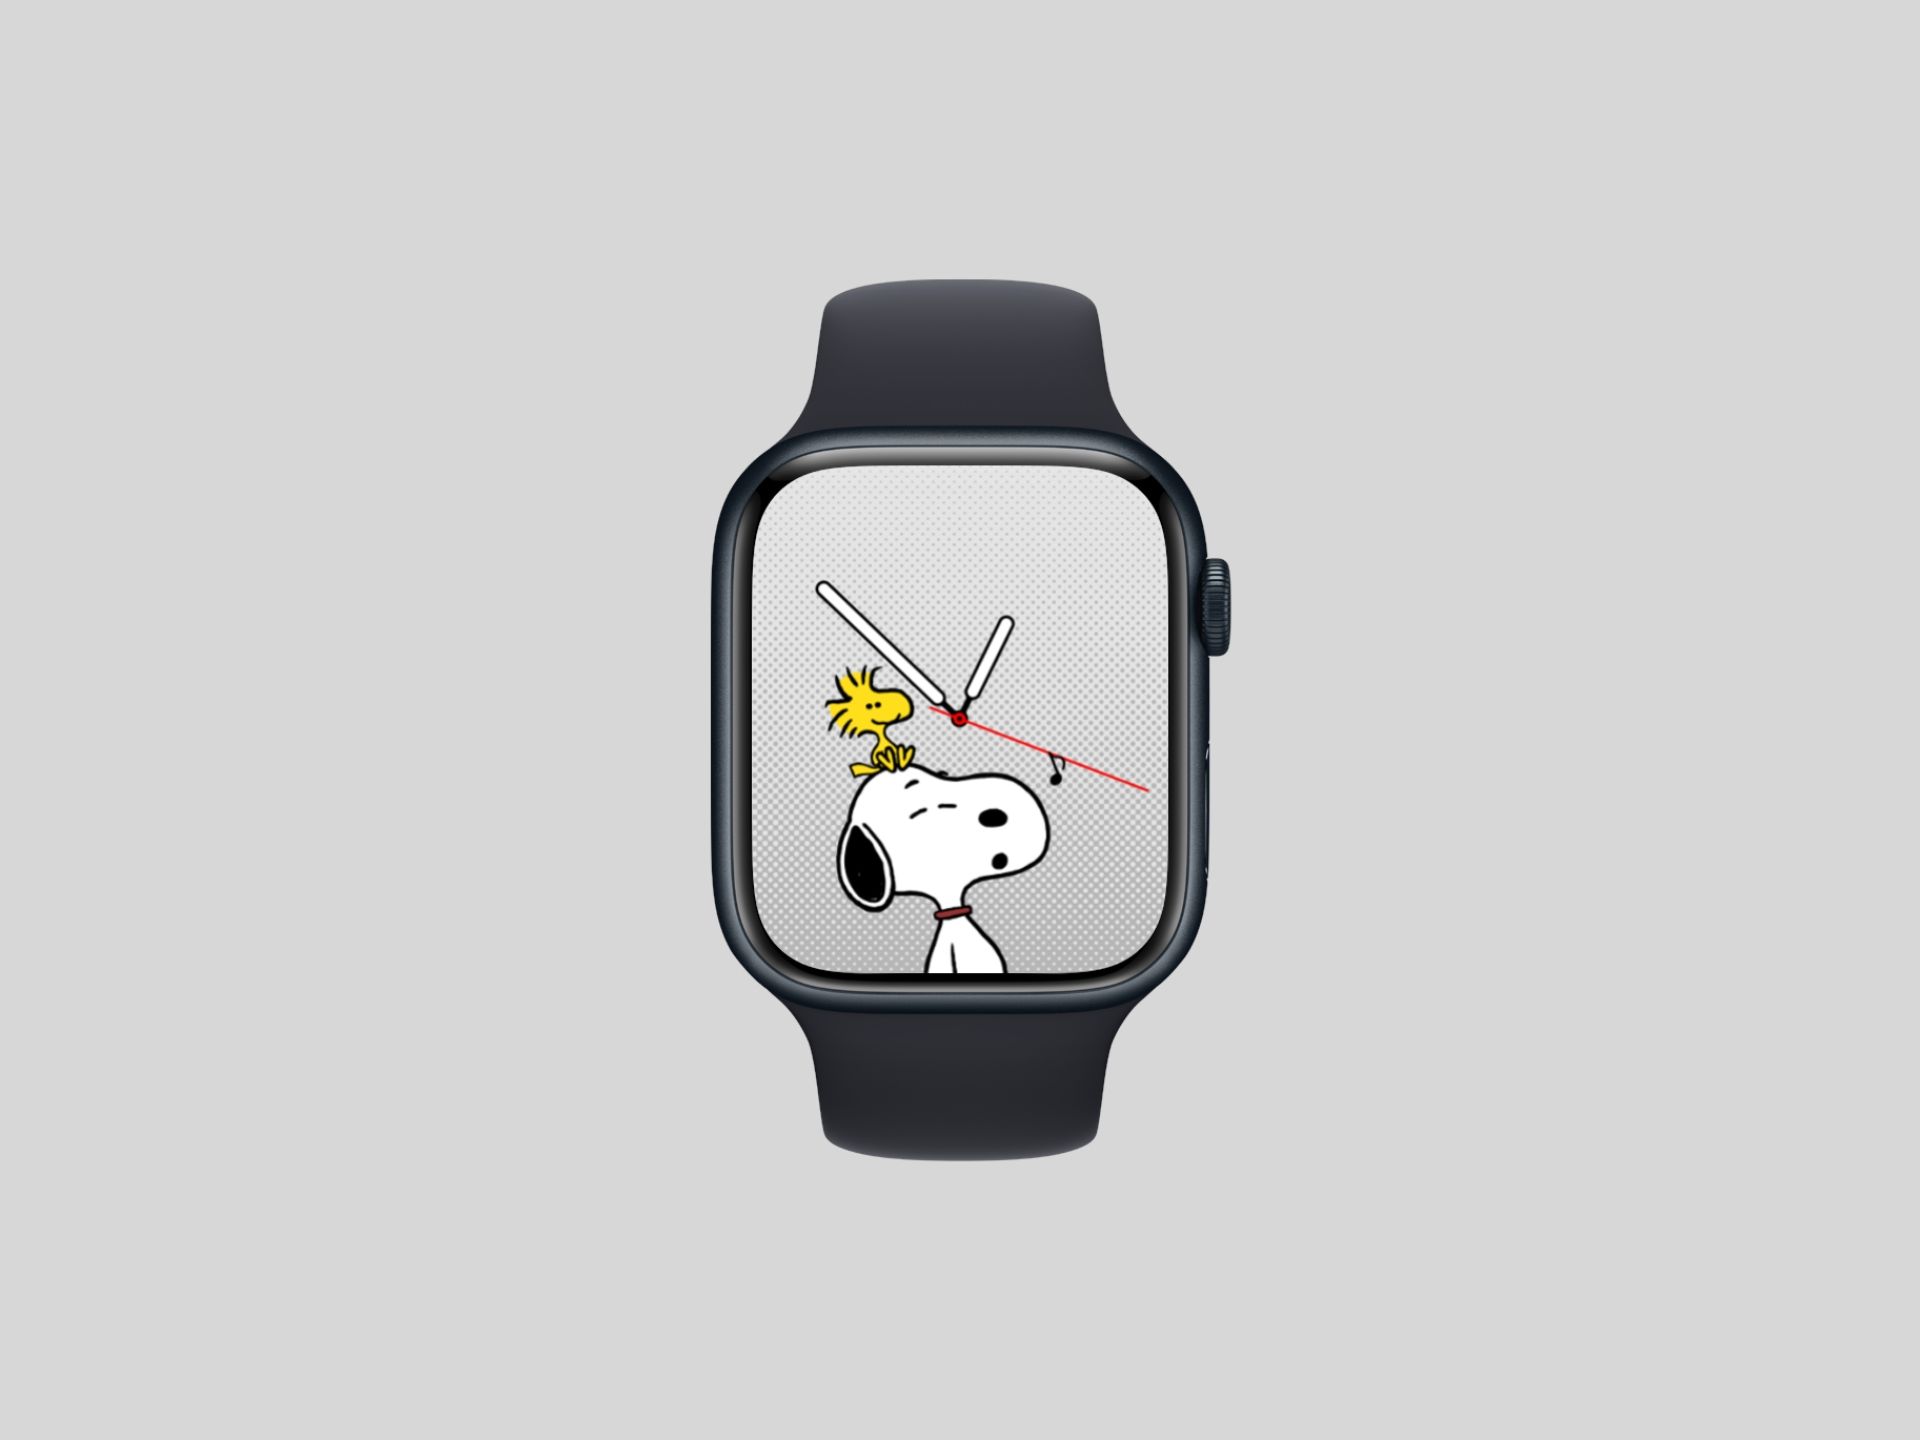 Apple Watch Snoopy Watch Face